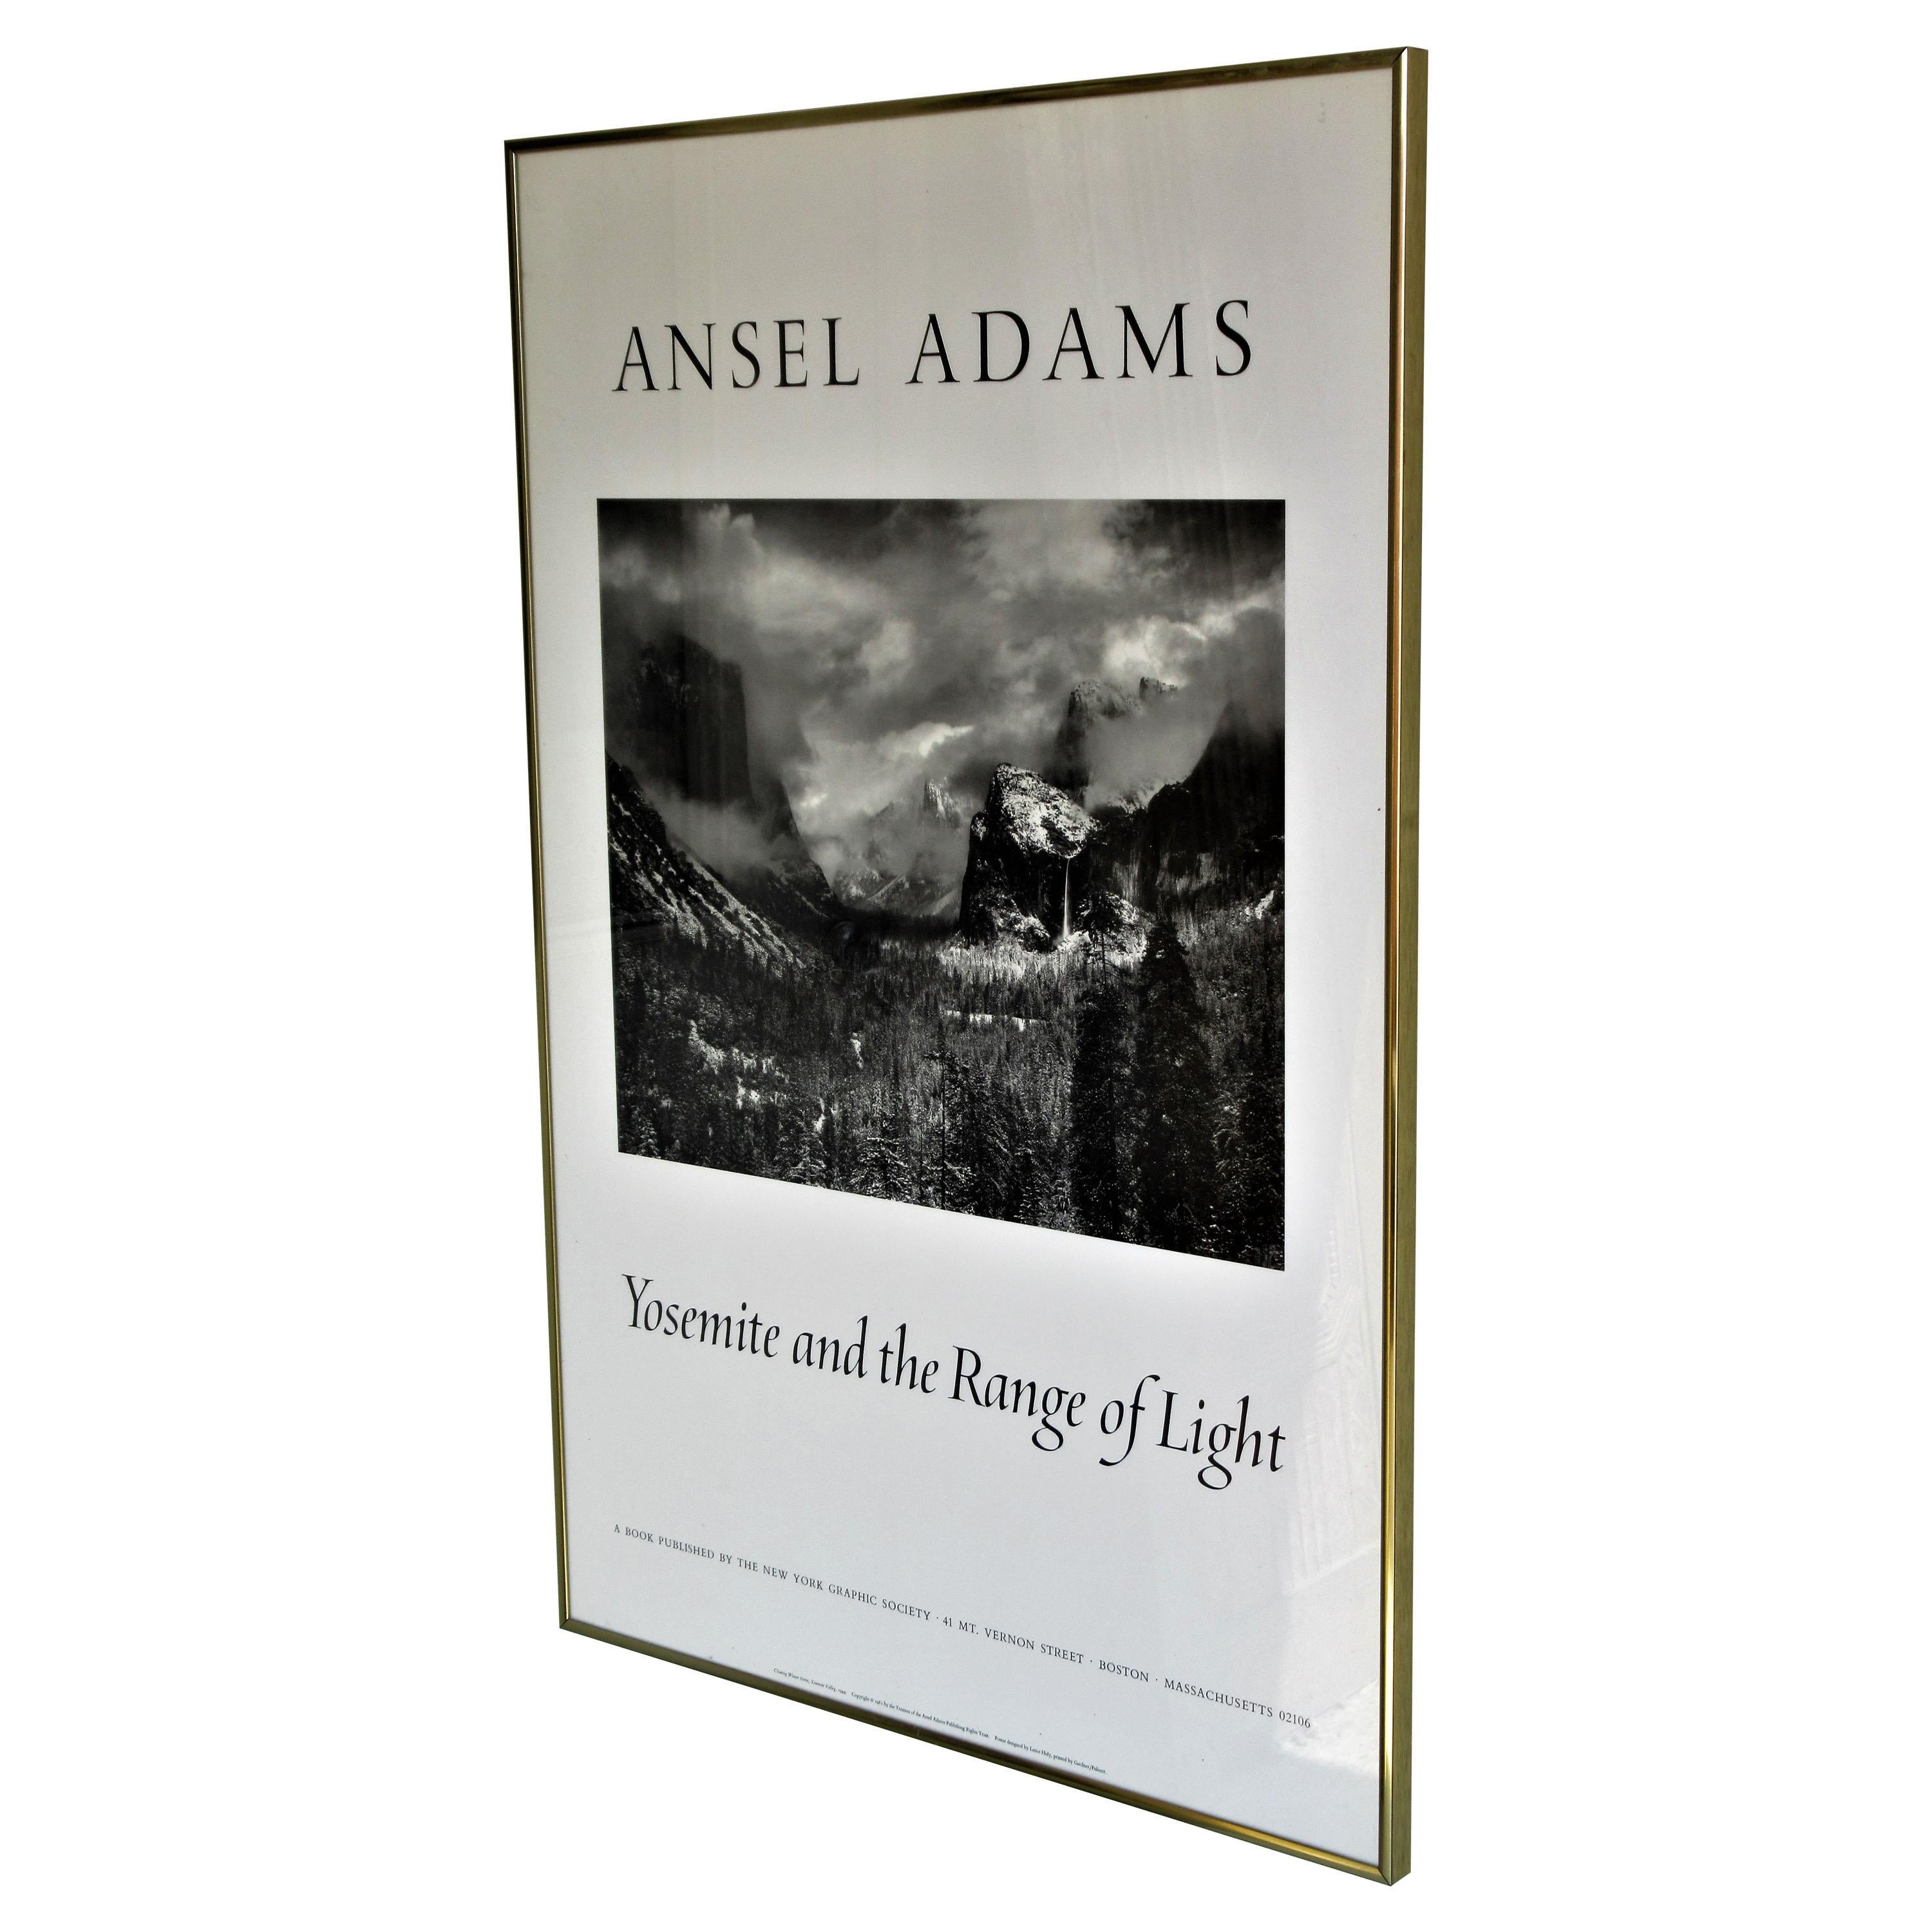 Ansel Adams, Yosemite and the Range of Light, New York Graphic Society, 1981